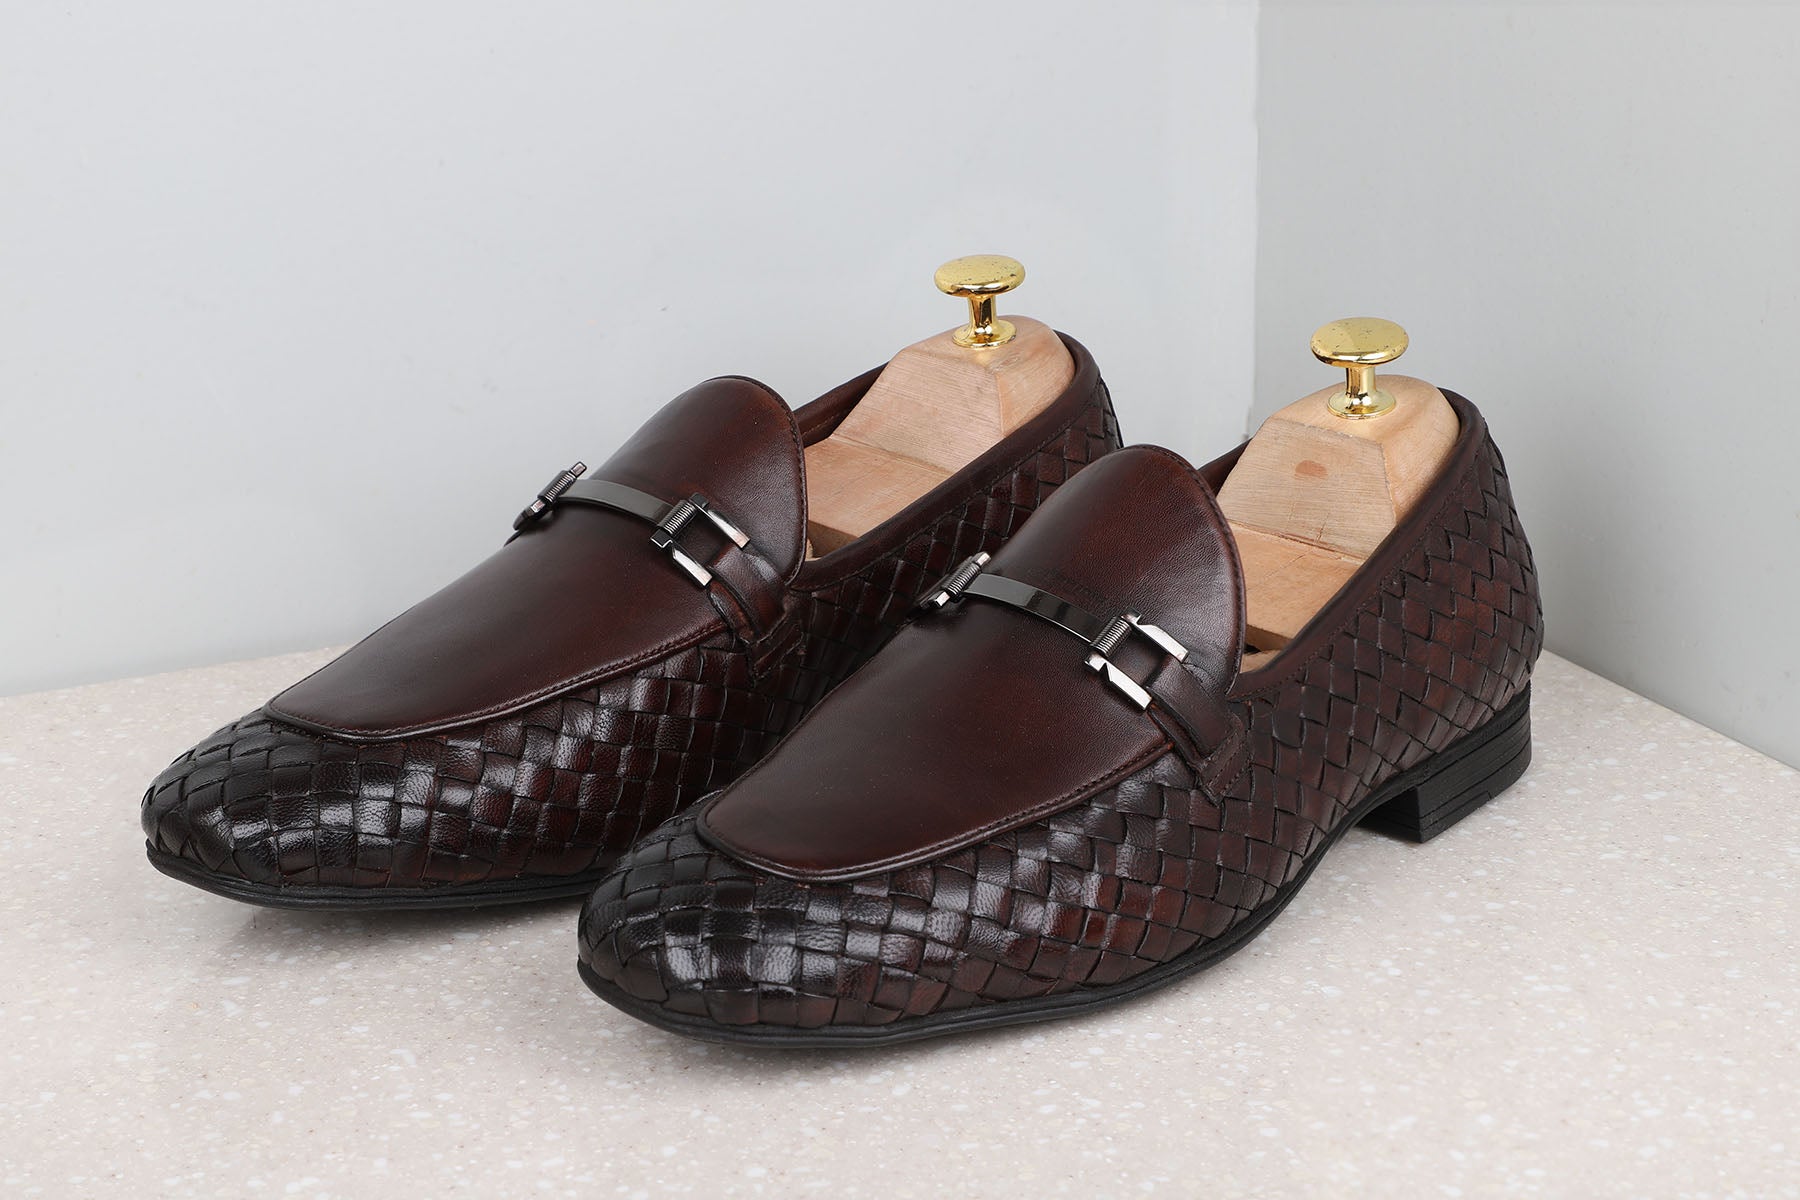 FORMAL SLIPPONS-BROWN-Men's Formal Slipons-Inc5 Shoes